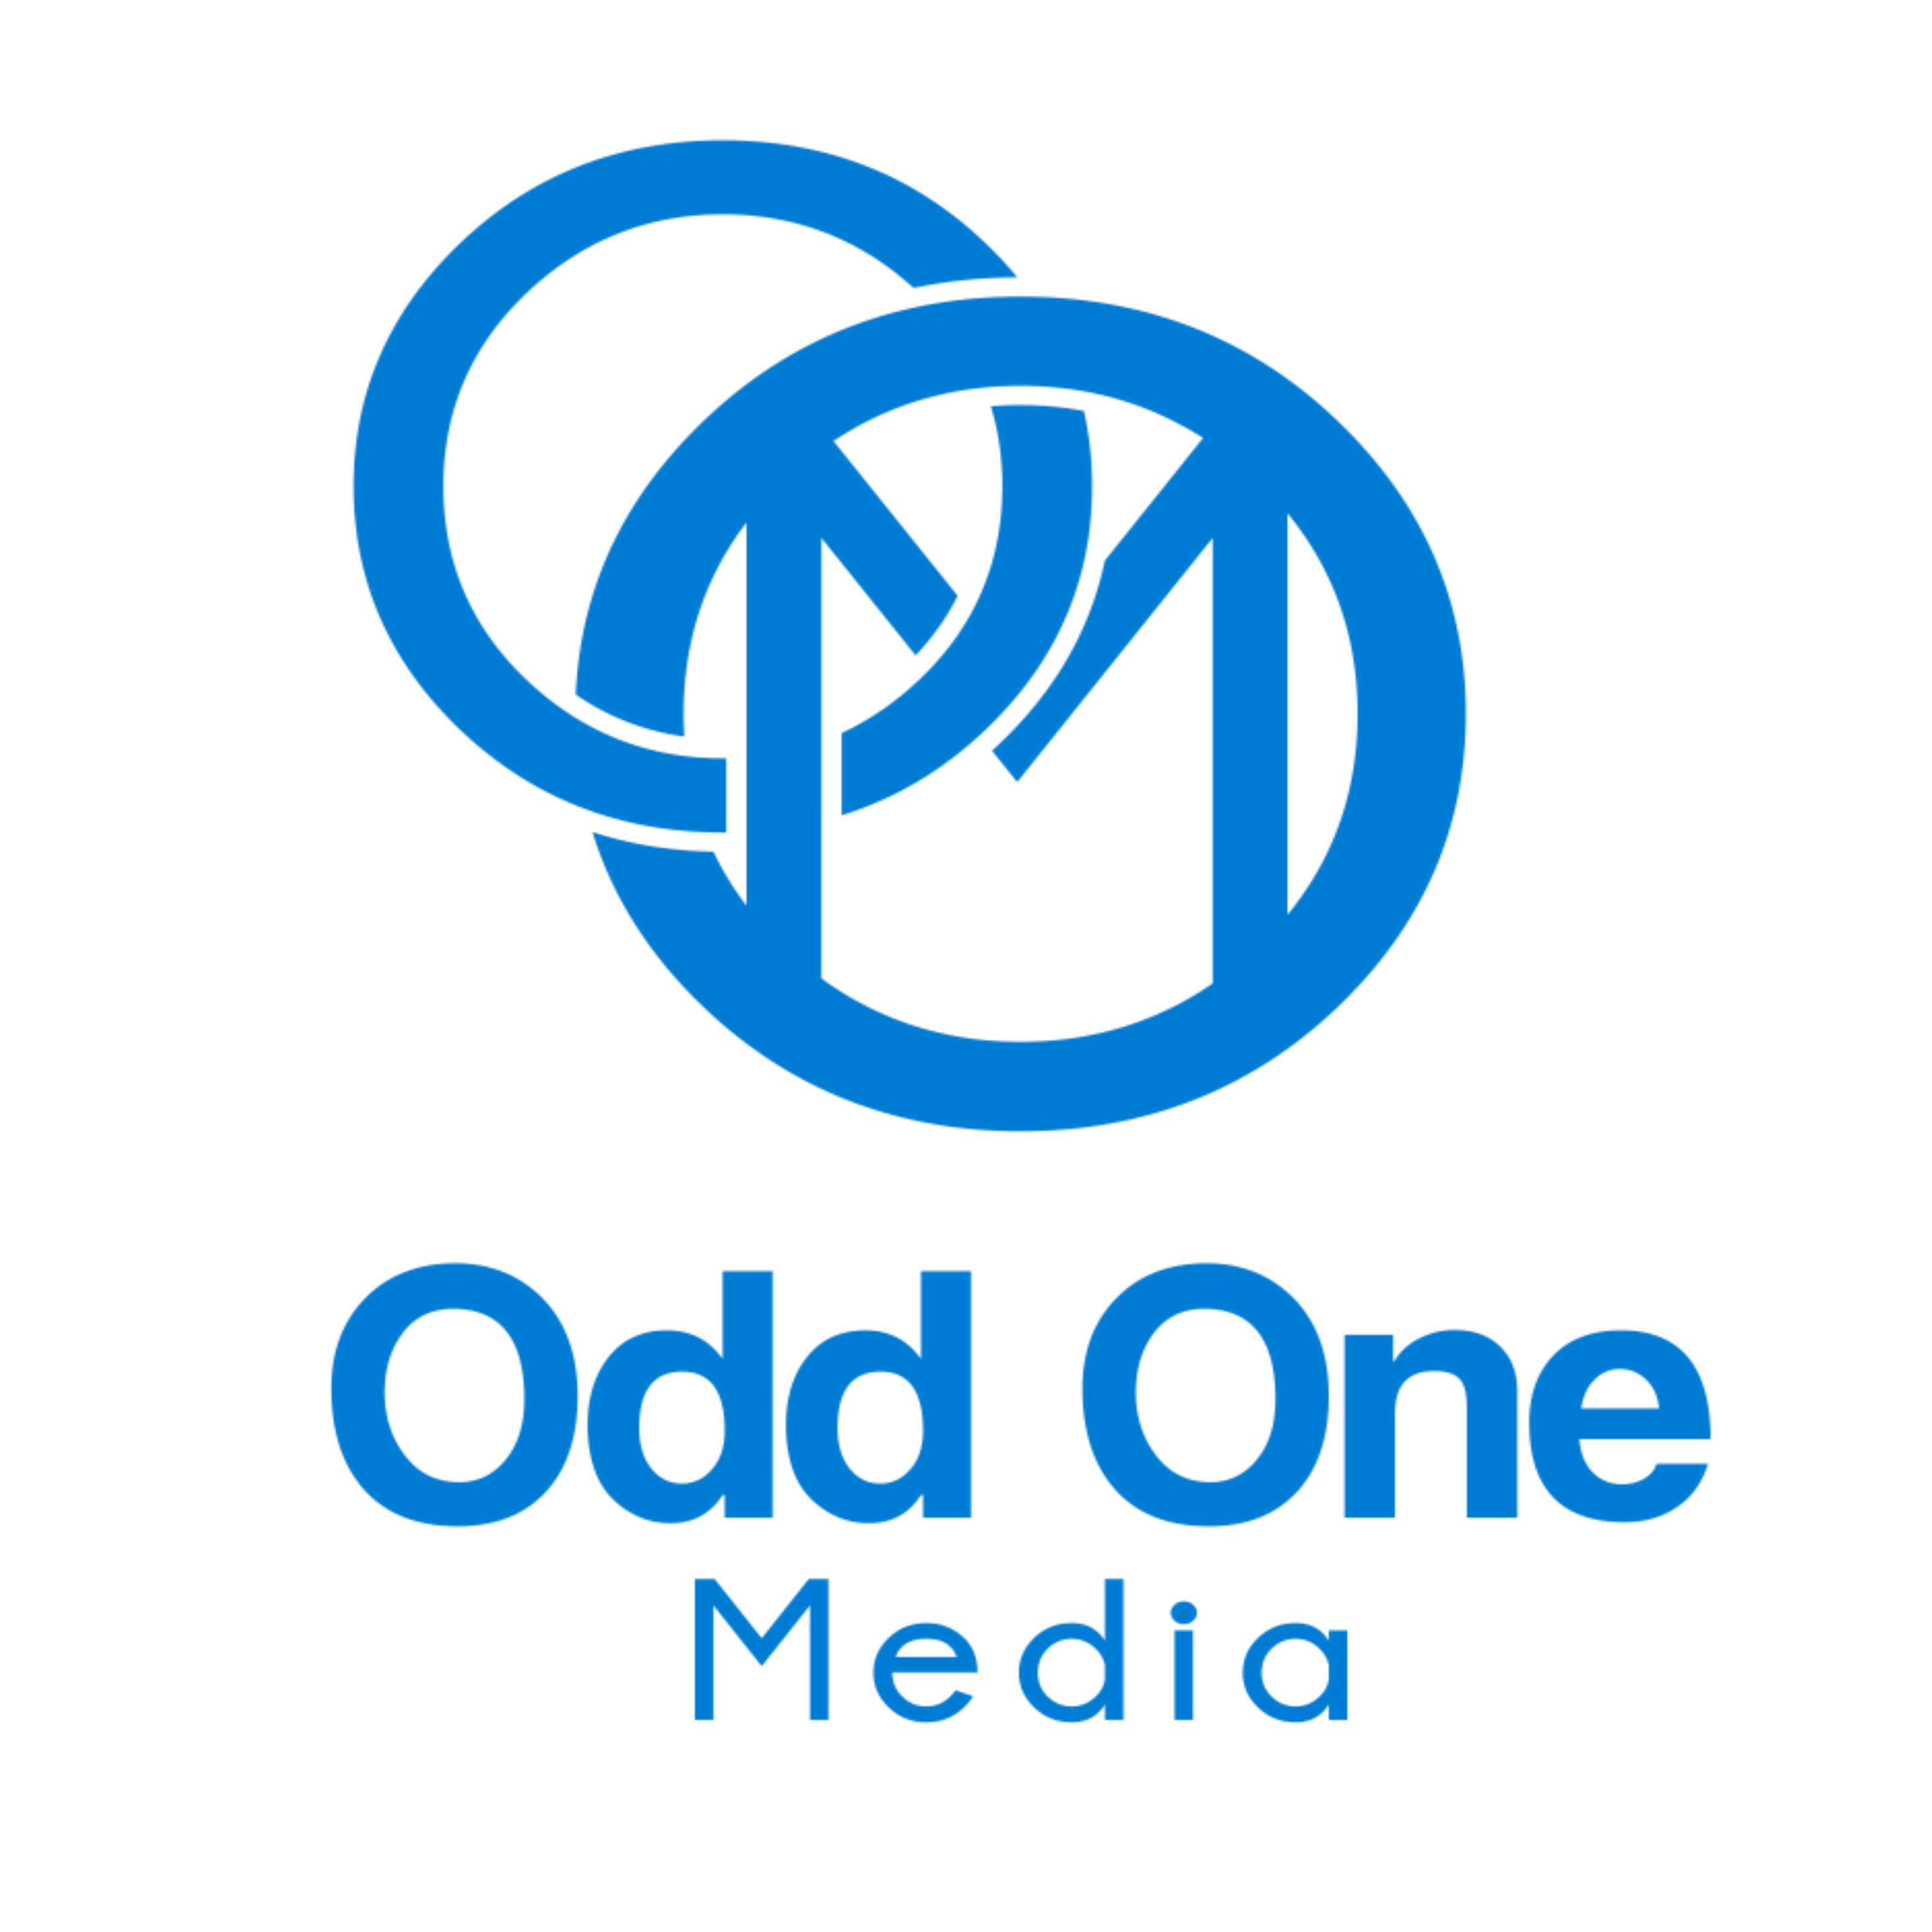 Odd One Media